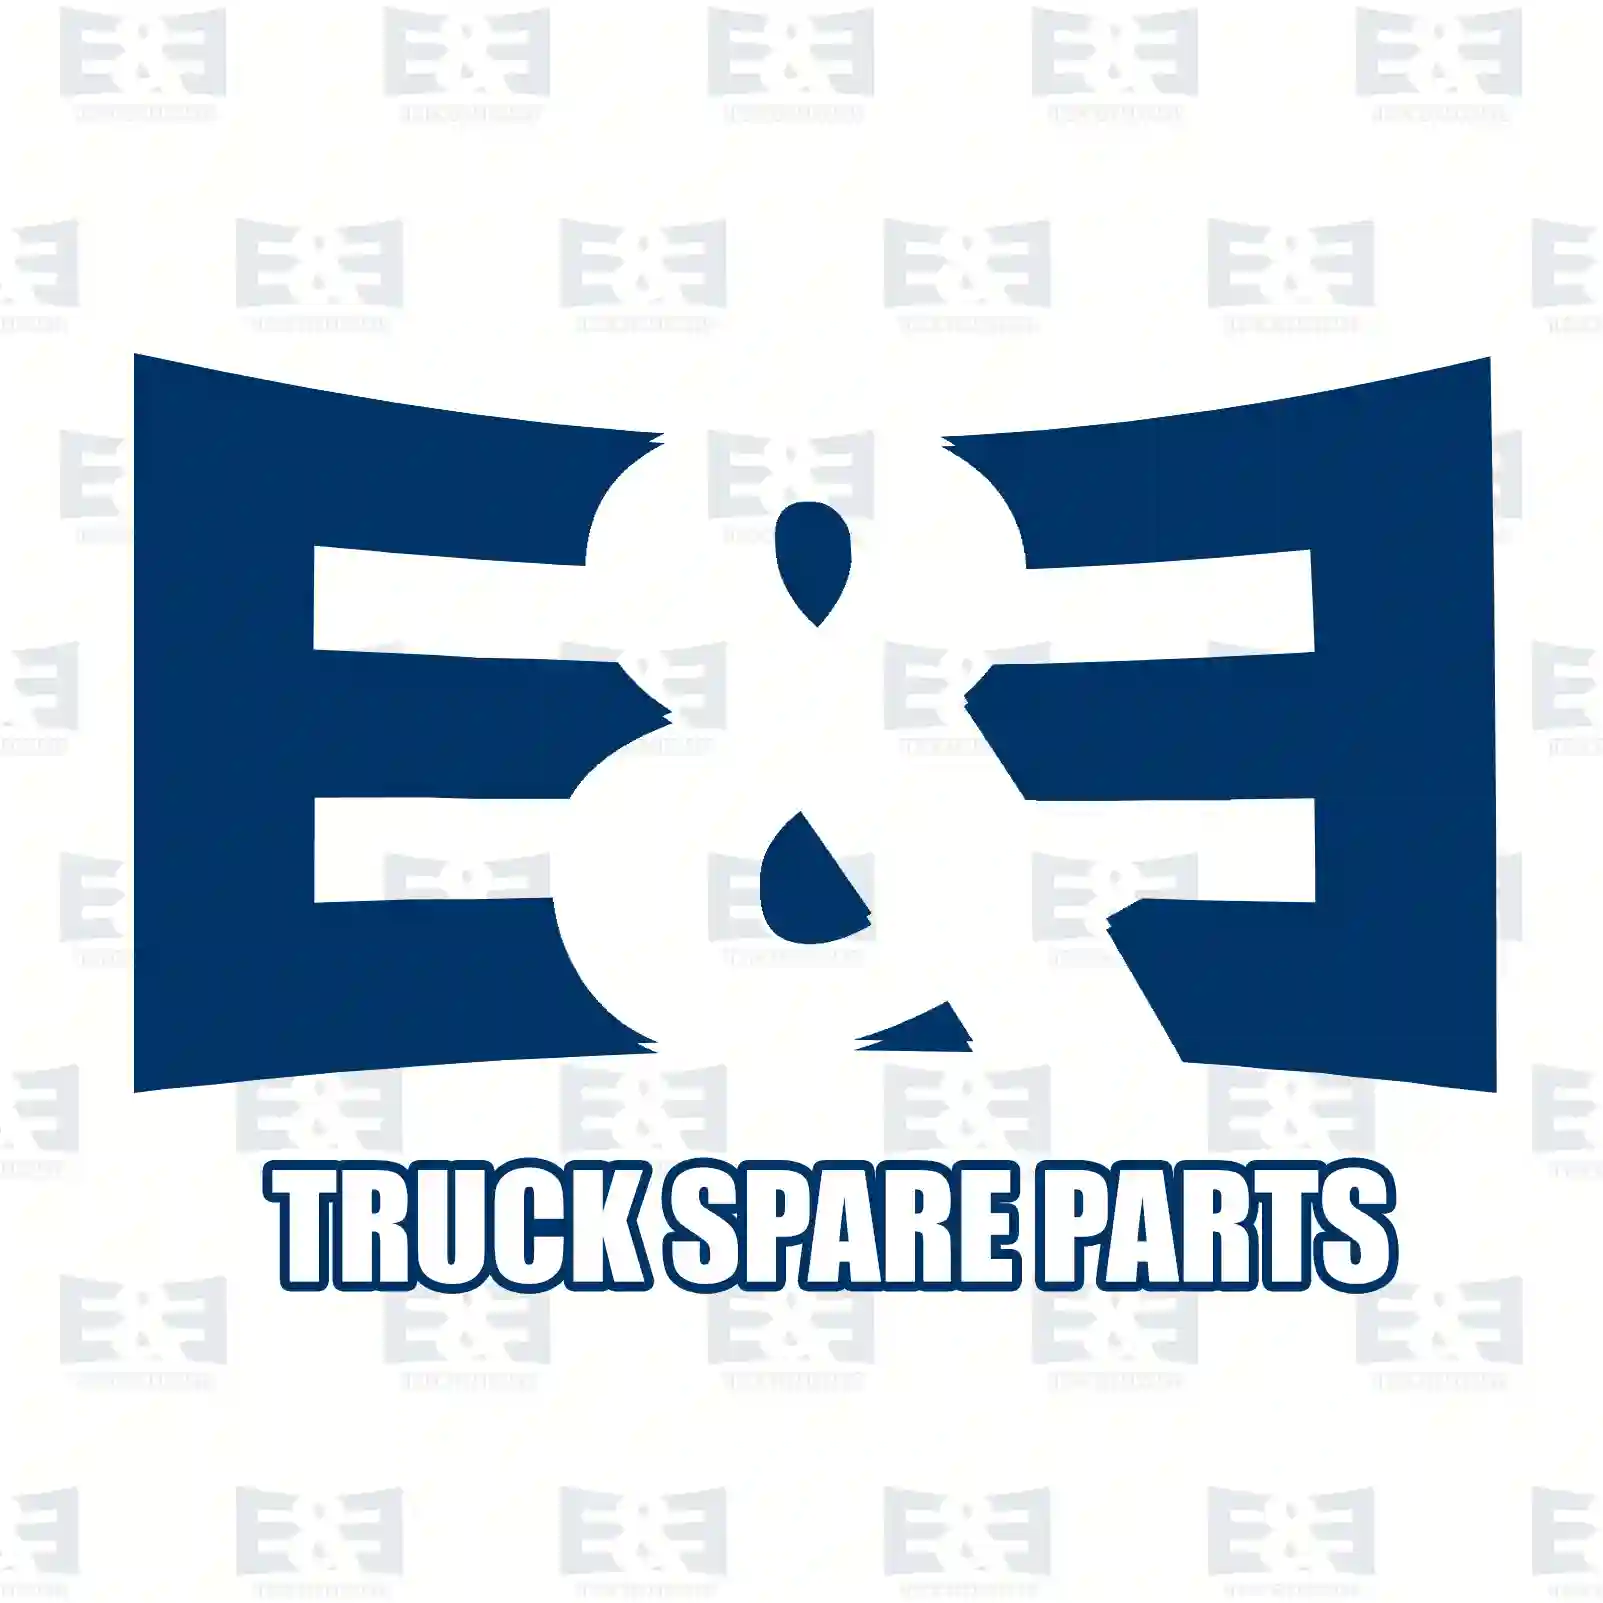 Compressor Valve plate, EE No 2E2293879 ,  oem no:42534533, 42550532, 79098367, 93161594 E&E Truck Spare Parts | Truck Spare Parts, Auotomotive Spare Parts